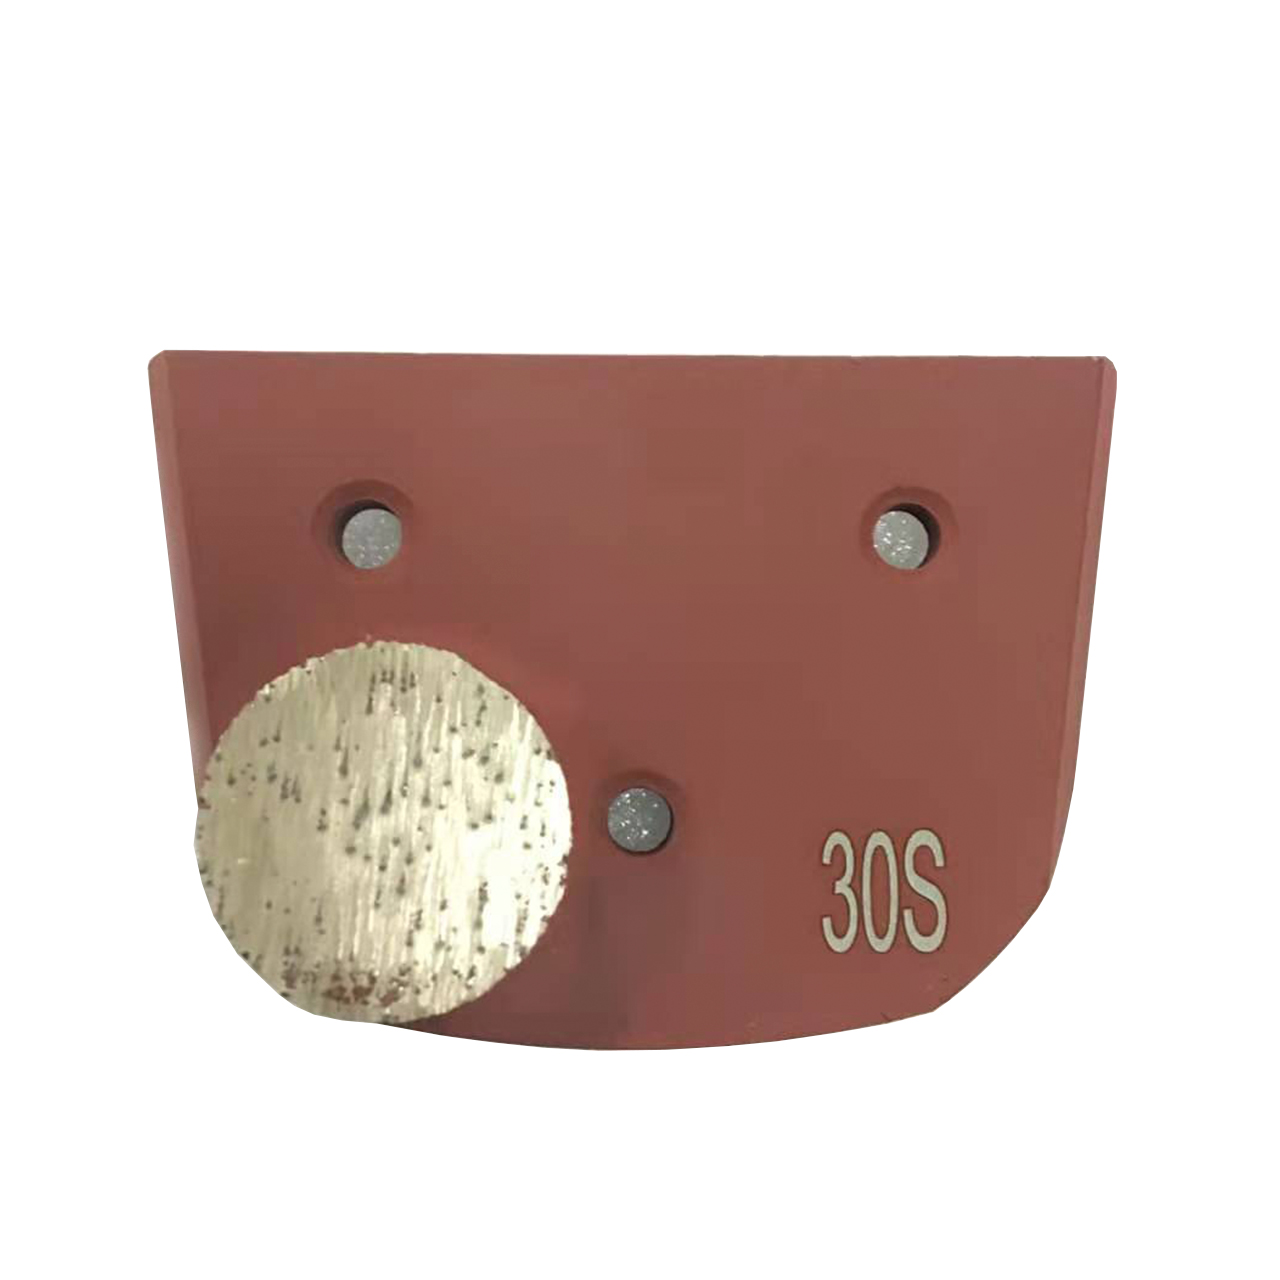 Lavina Single Button Segment Diamond Grinding Disc (LVS-1)